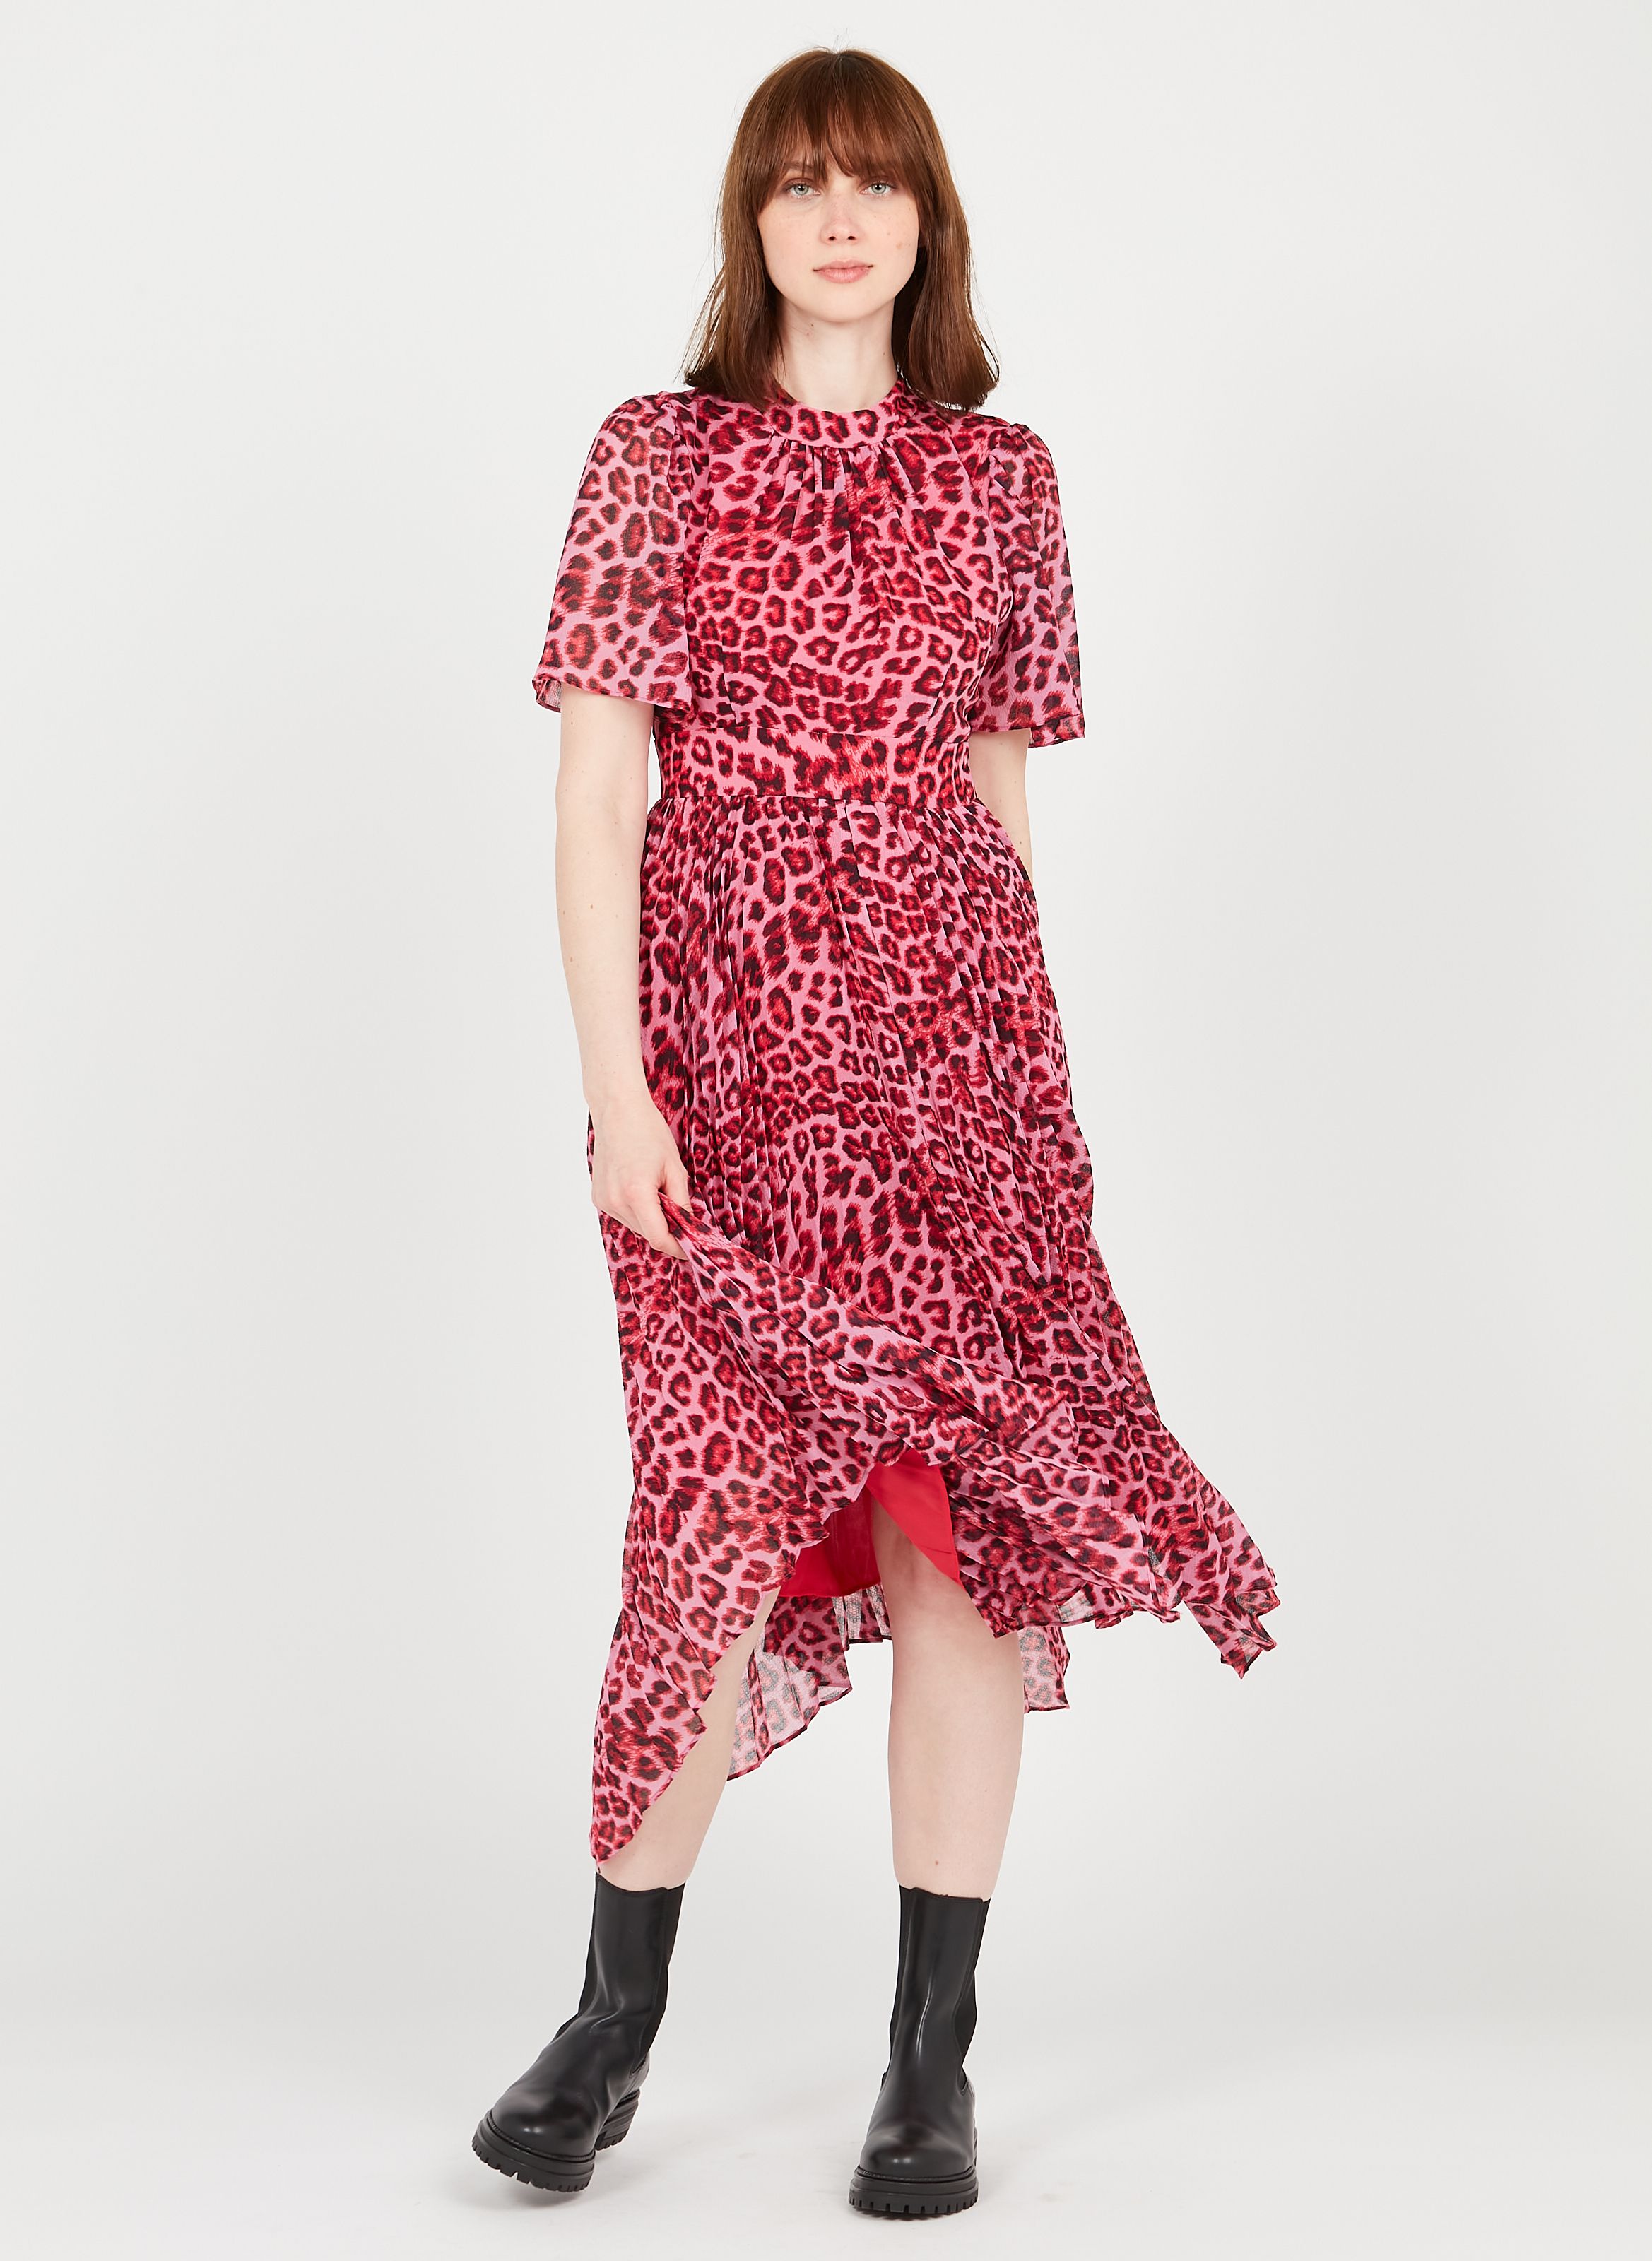 Whistles Pink Leopard Print Dress